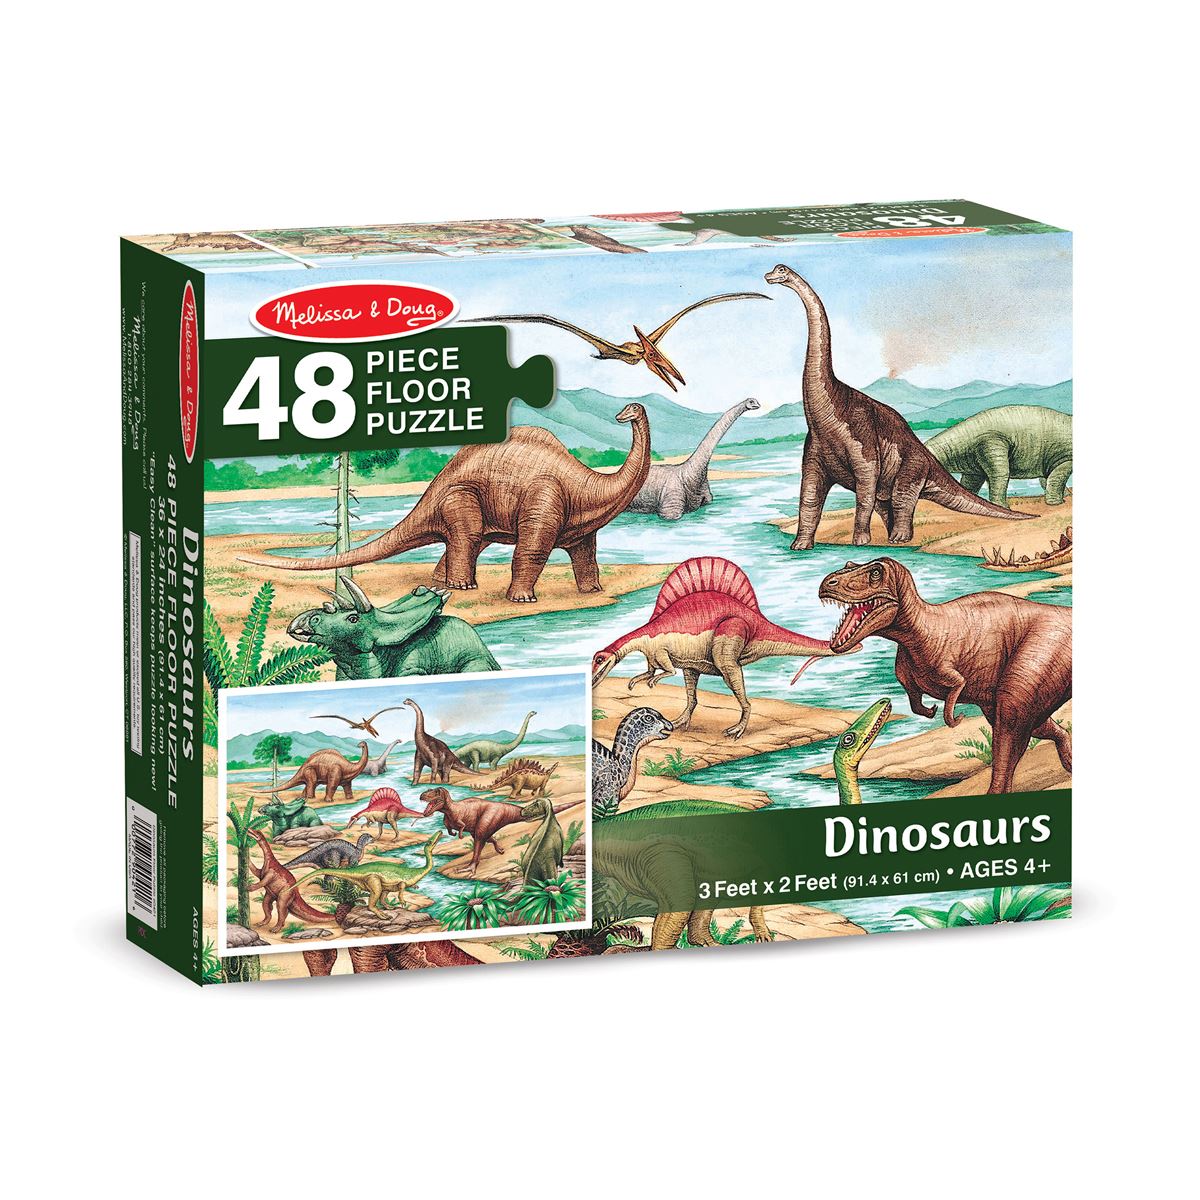 Melissa & Doug(R) 48pc. Dinosaurs Floor Puzzle